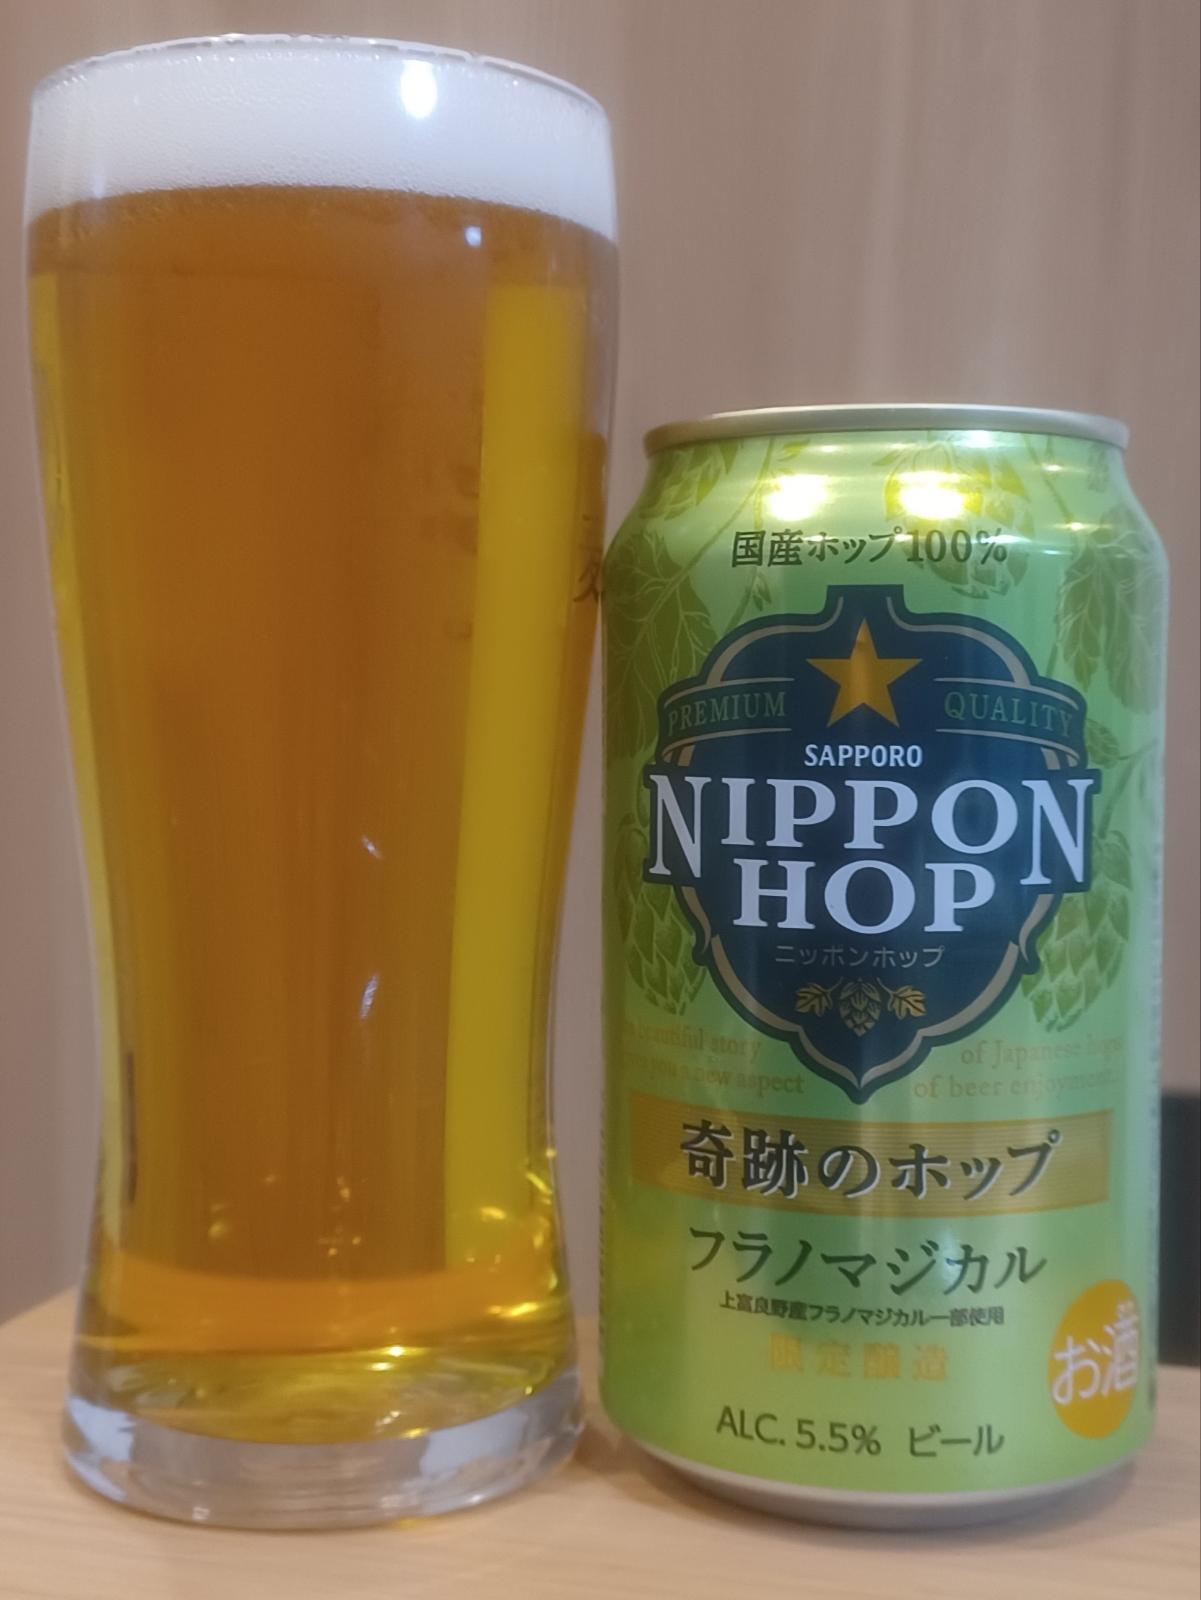 Nippon Hop - Kiseki no Hop Furano Magical